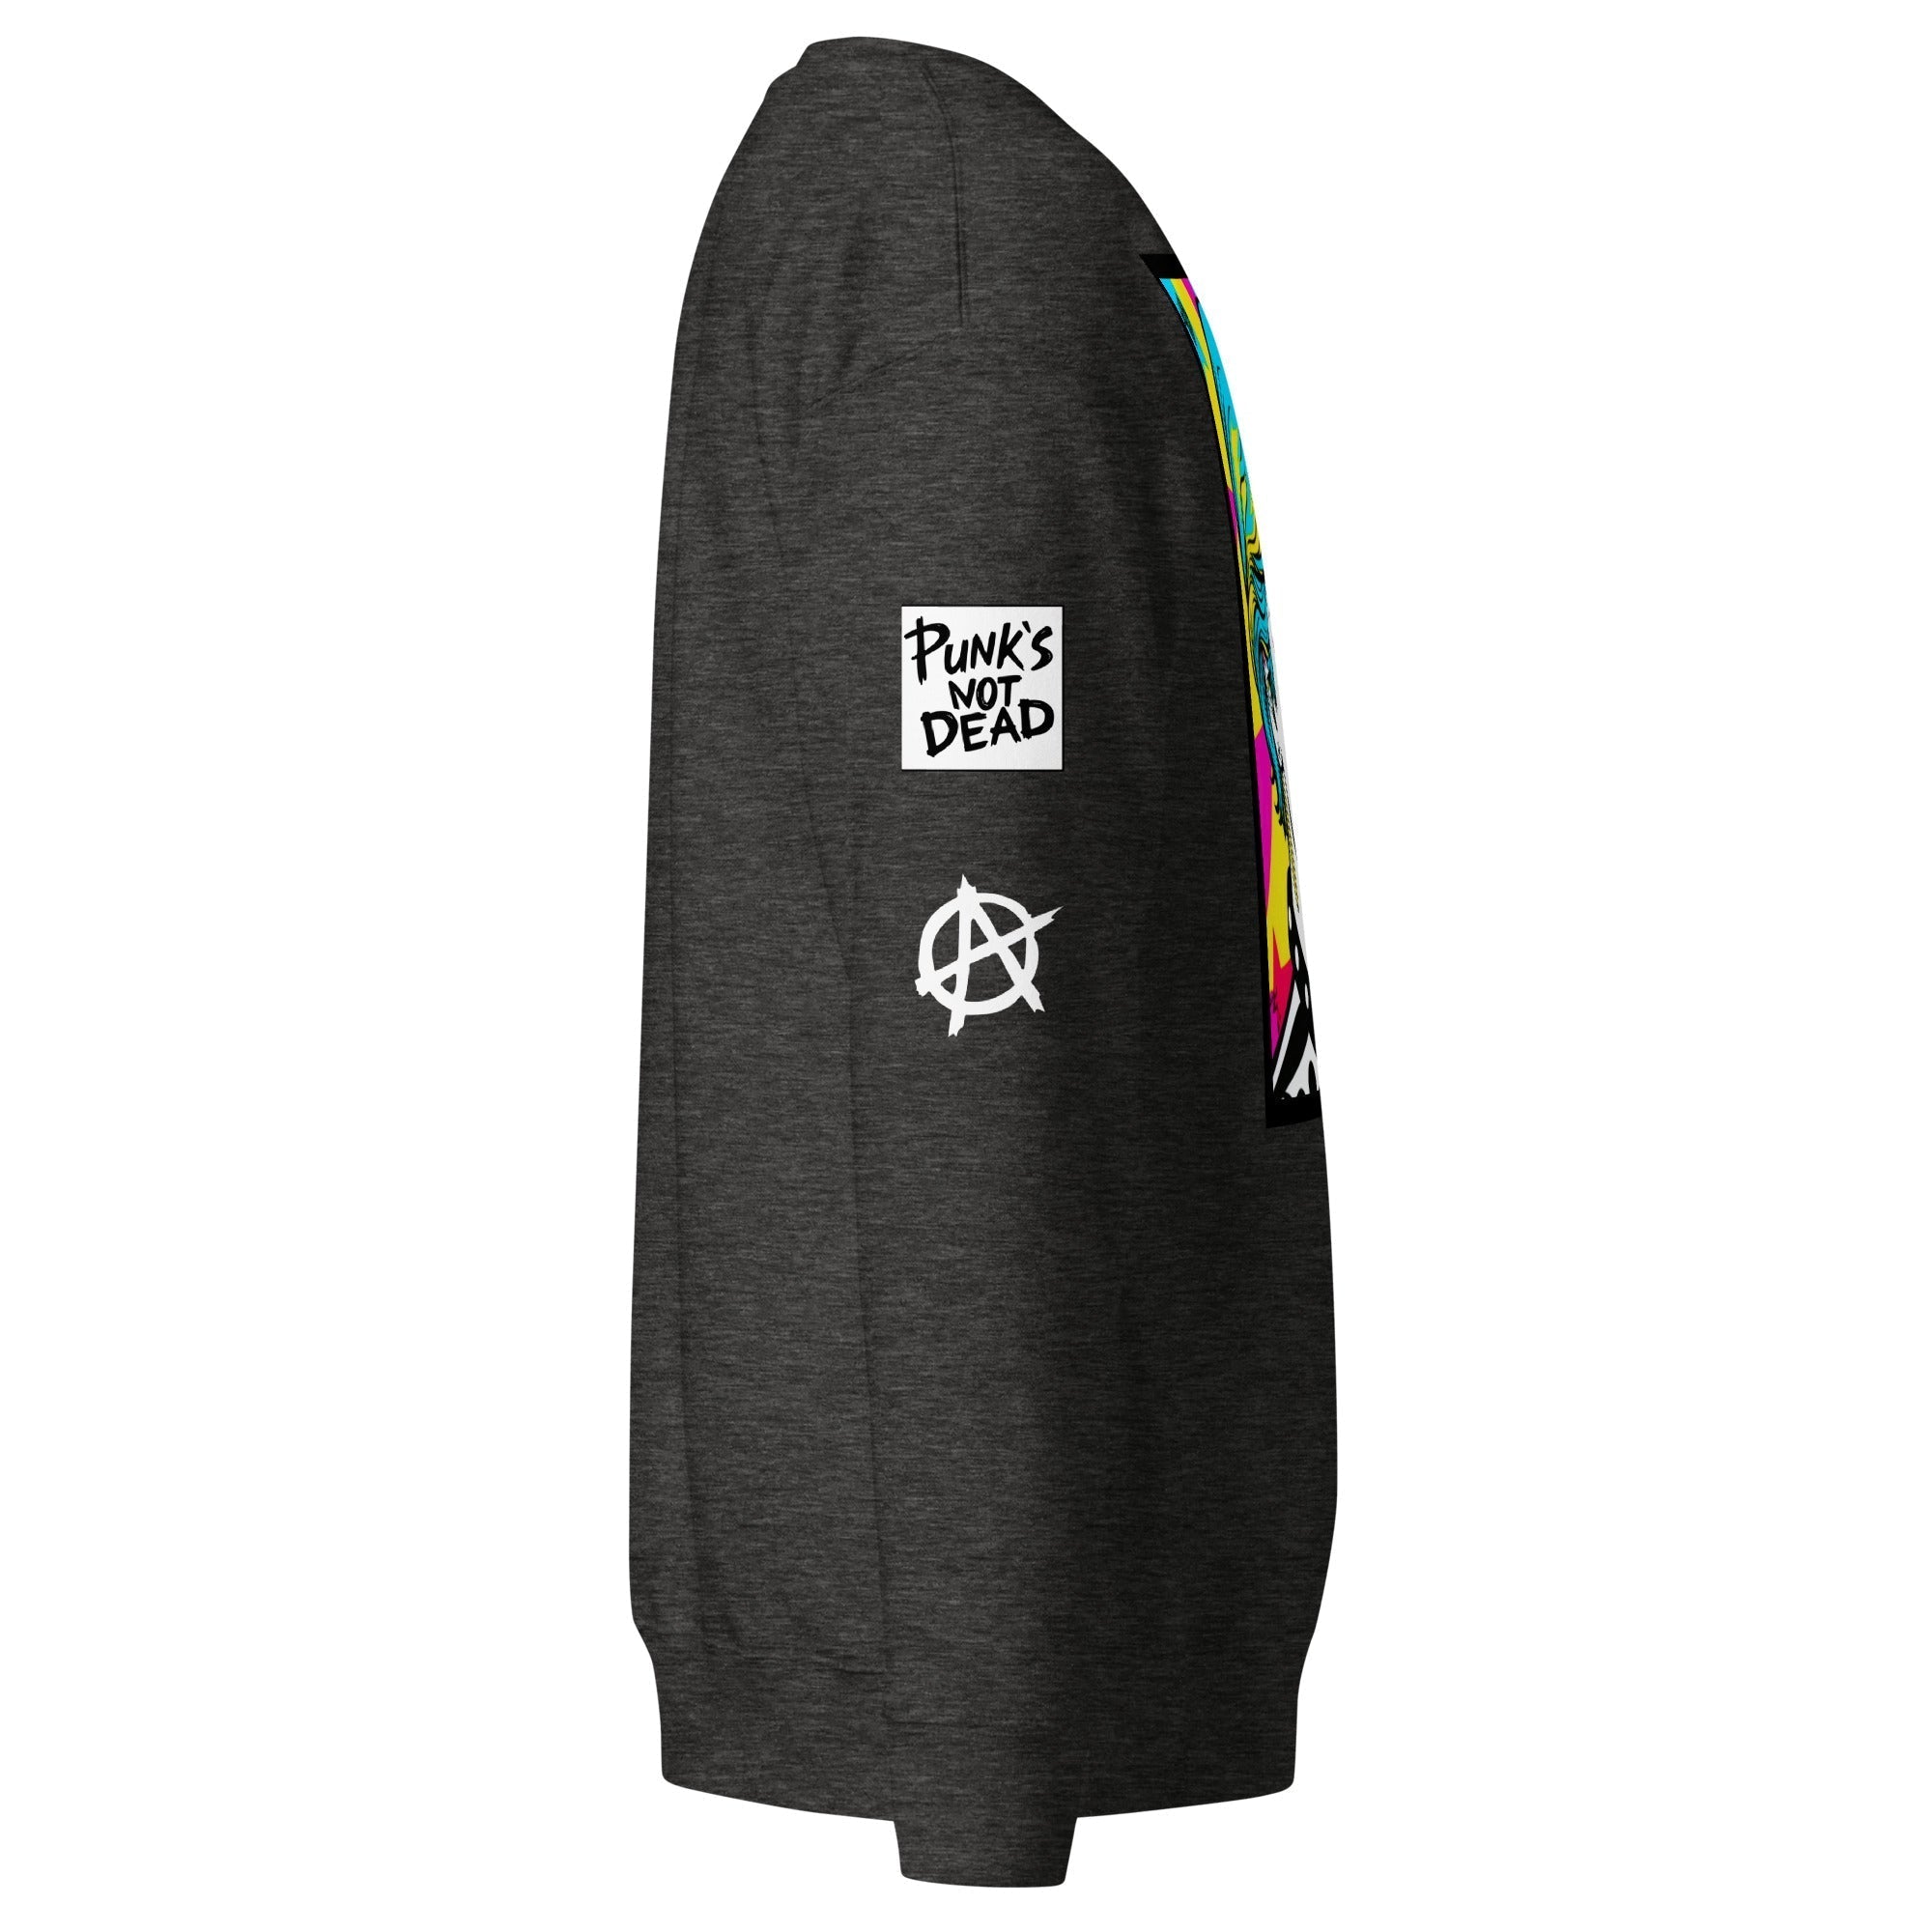 Unisex Premium Sweatshirt - Punk Pop Art Scene 6 - GRAPHIC T-SHIRTS